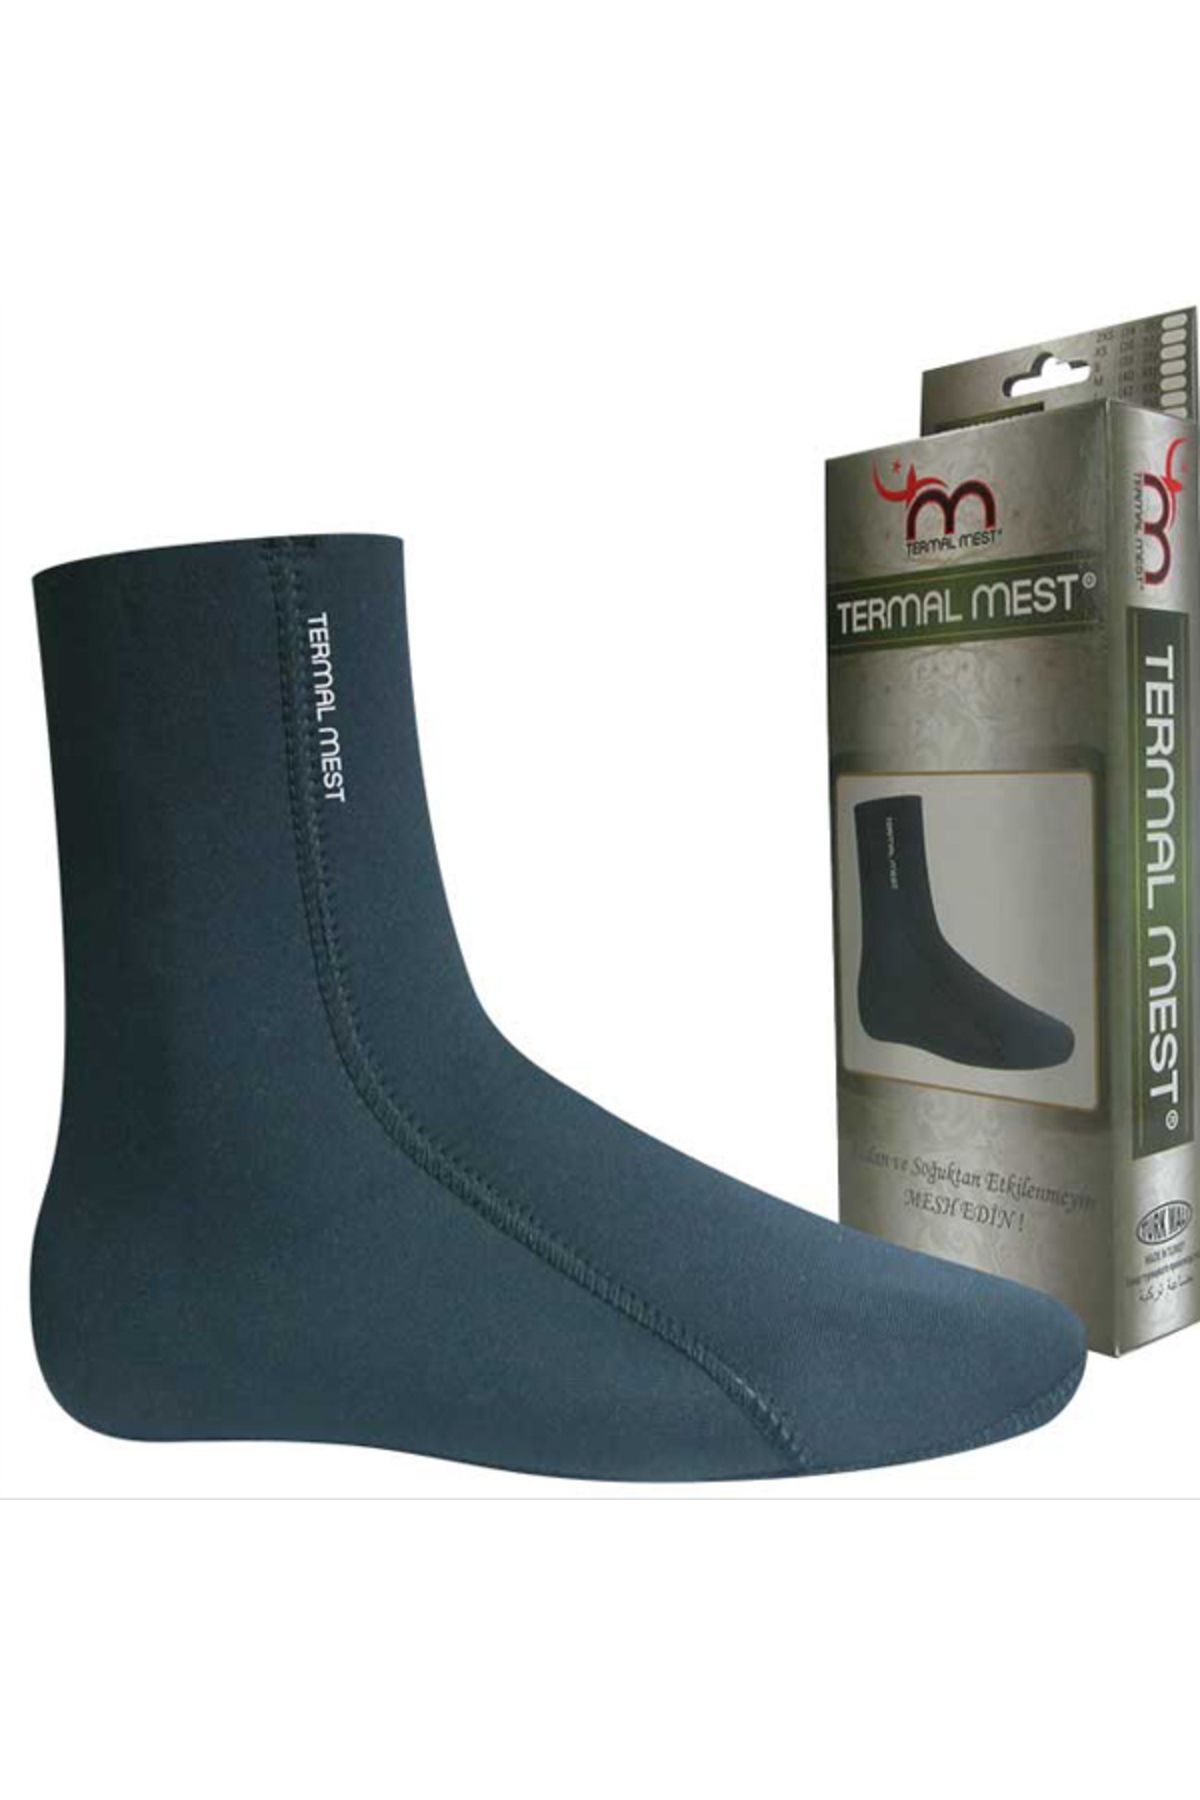 Genel Markalar Outdoor Neopren Termal Mest Çorap Siyah  M   40-41